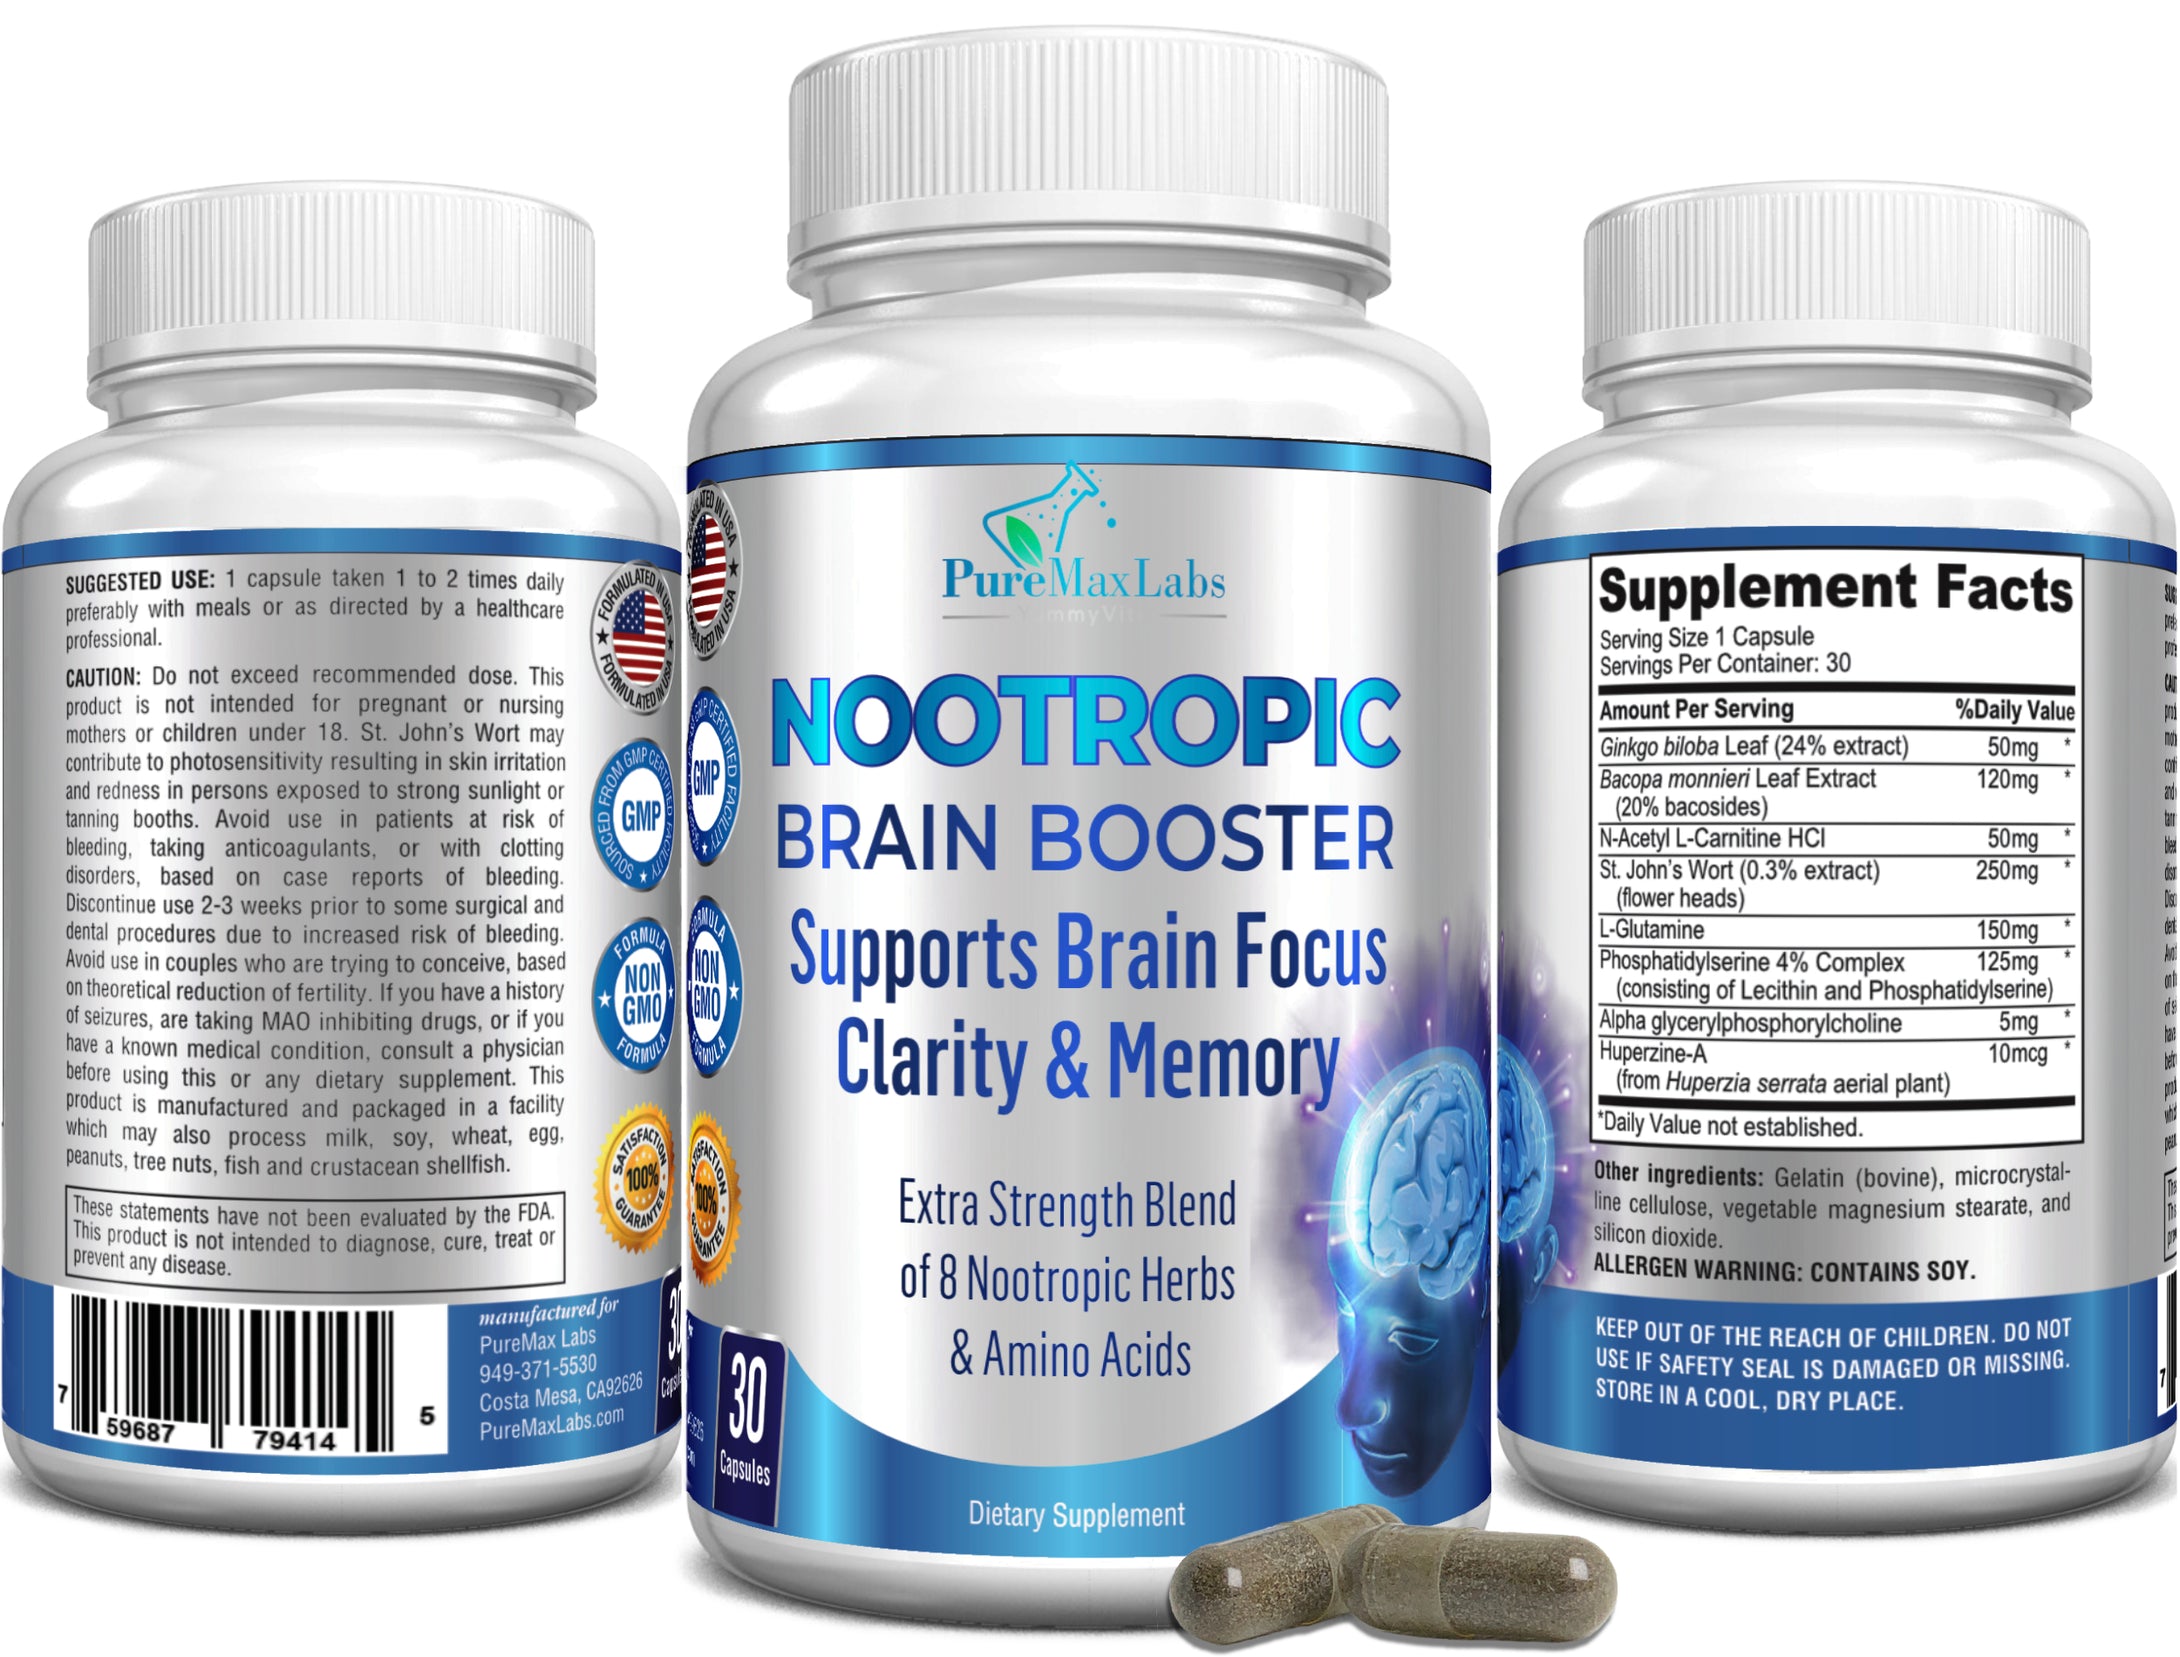 Nootropic Brain Booster, Supports Brain Focus, Clarity & Memory - 30 Capsules,